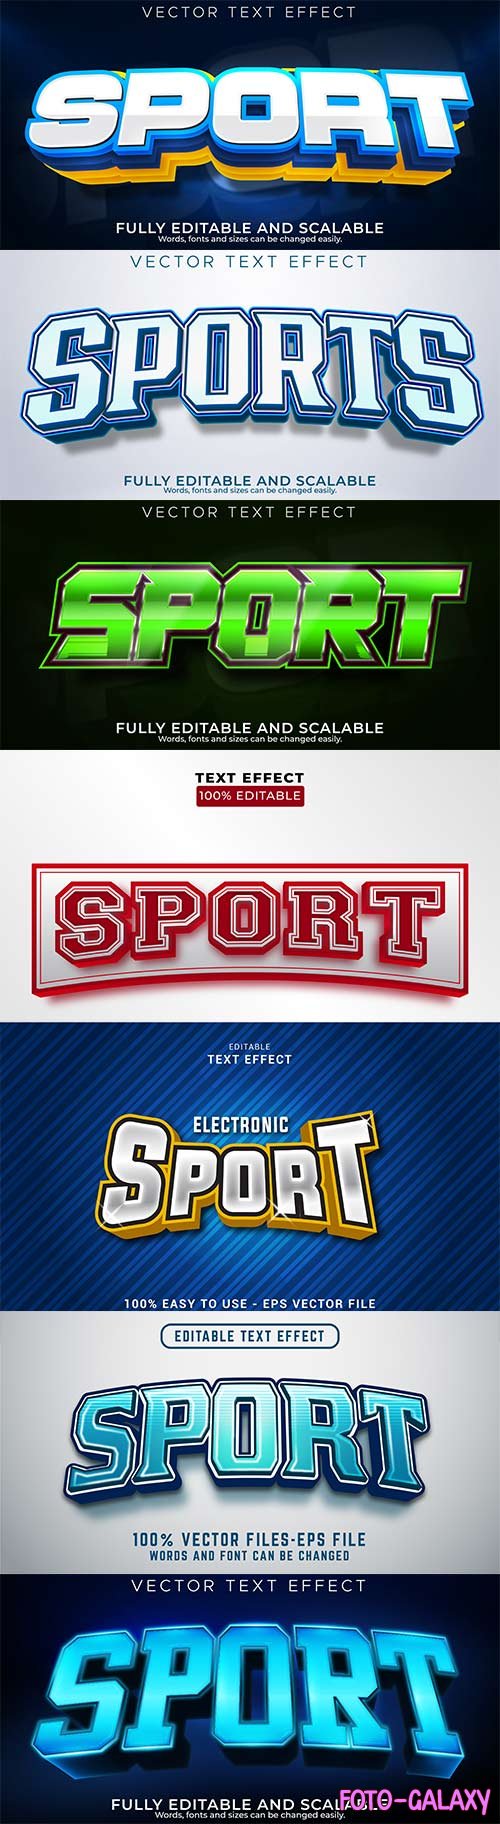 Sport 3d editable text style effect vector vol 251